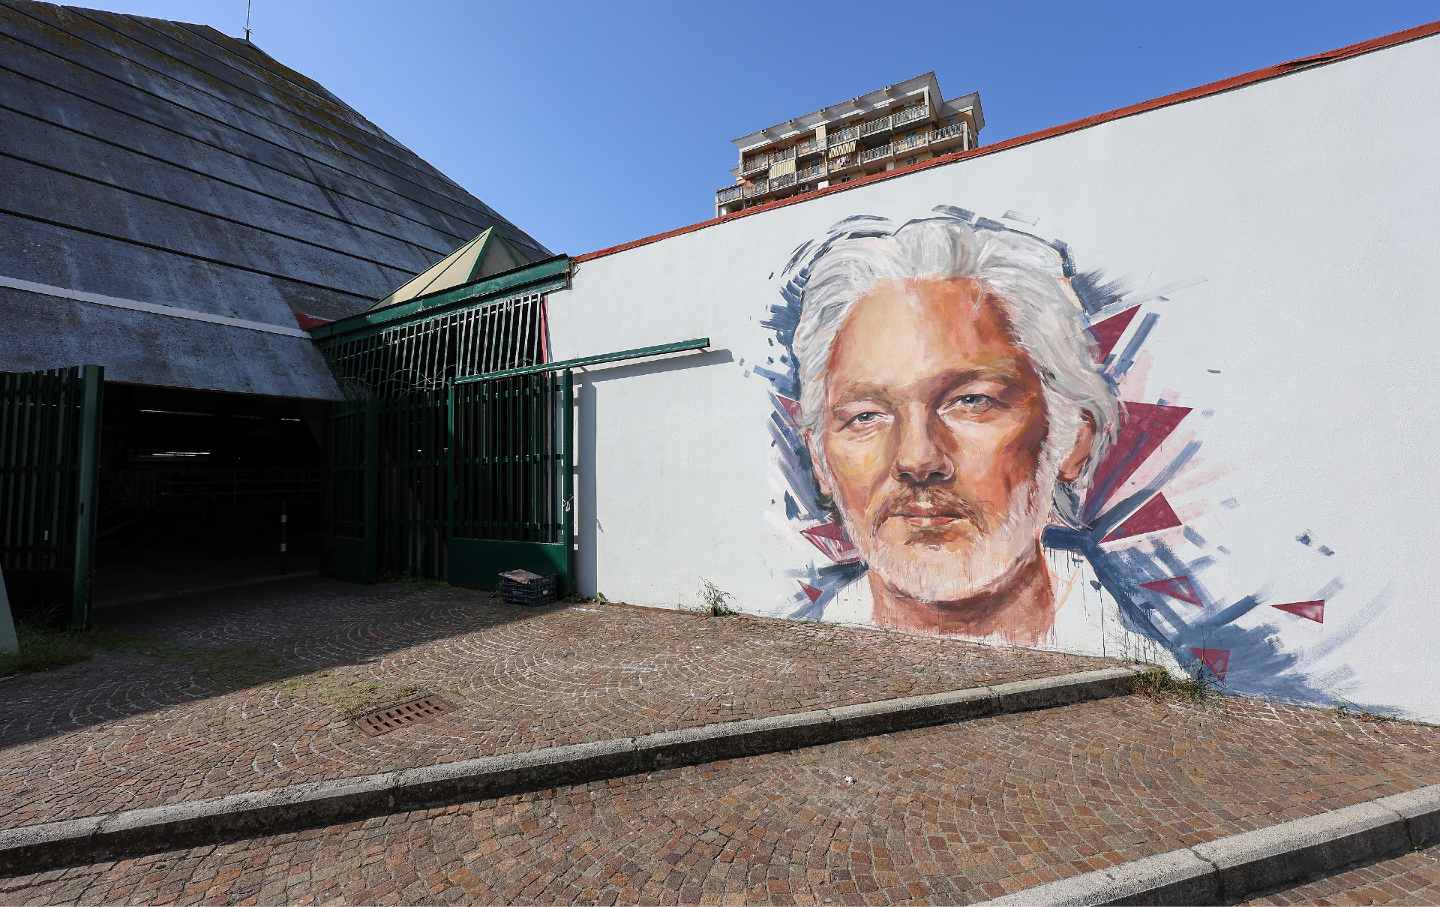 mural depicting the Australian activist Julian Assange, by street artist Trisha Palma, in the Scampia neighborhood of Naples.